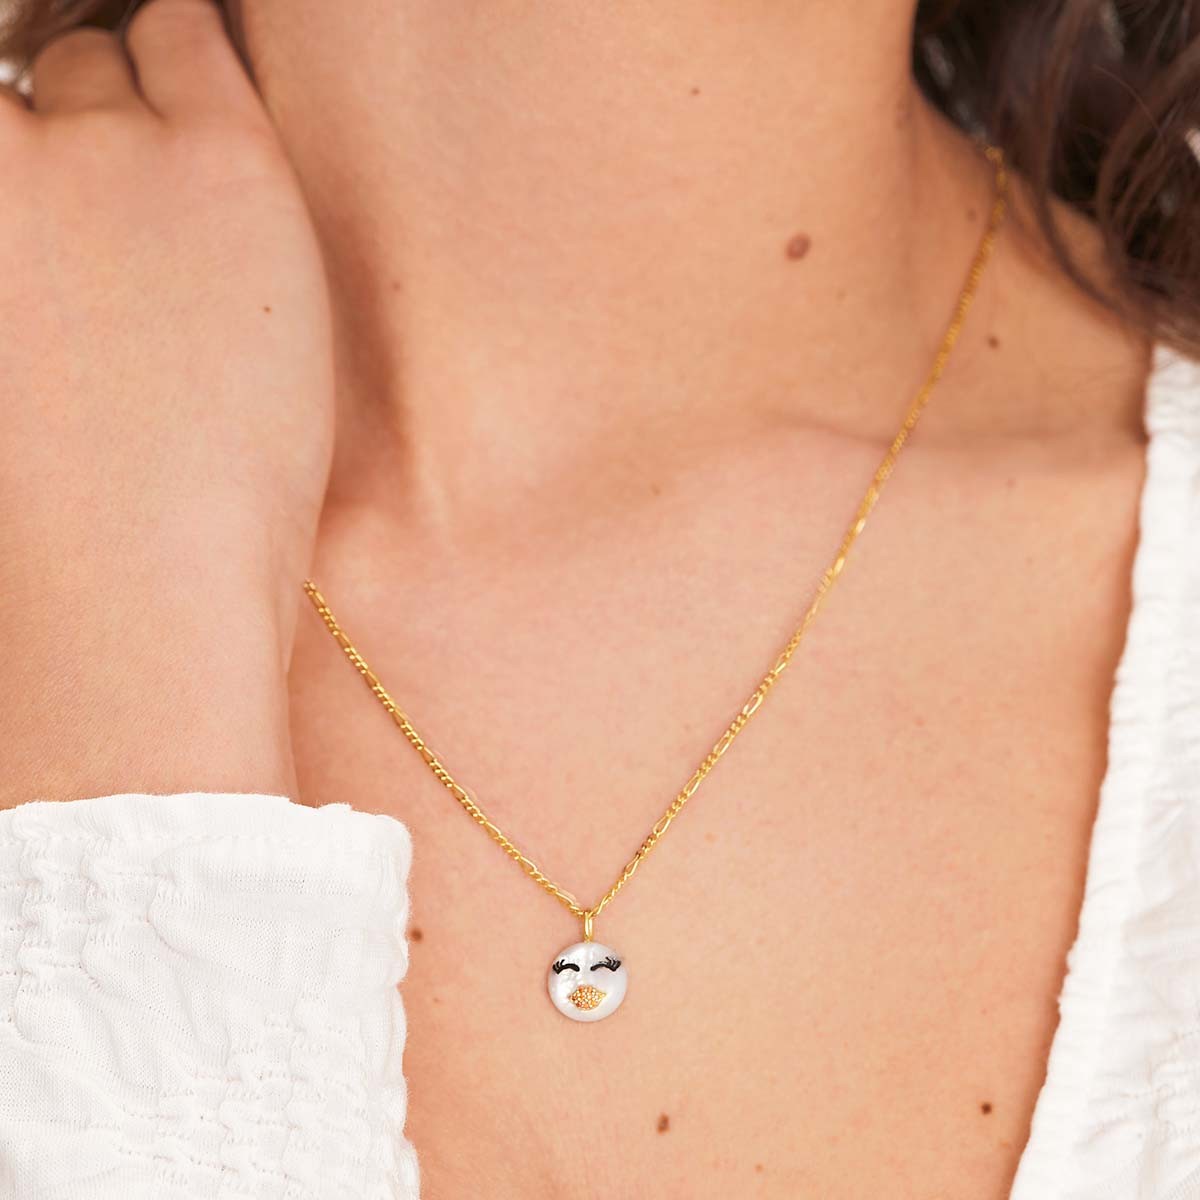 Rebel Lovely Necklace - Halsketten - Weiß - 18k vergoldet